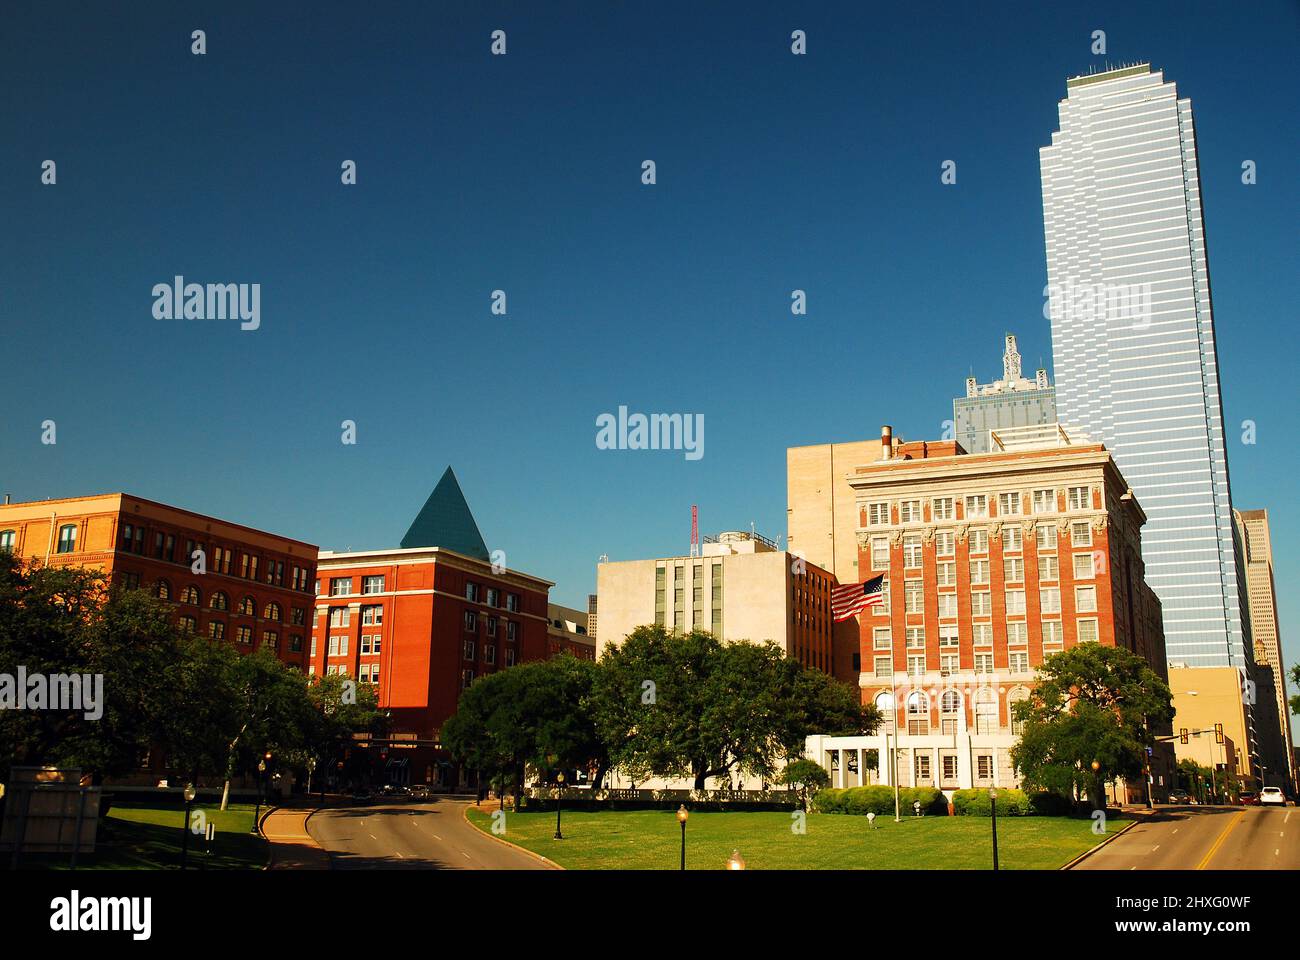 Dealey Plaza, Dallas Texas Stock Photo